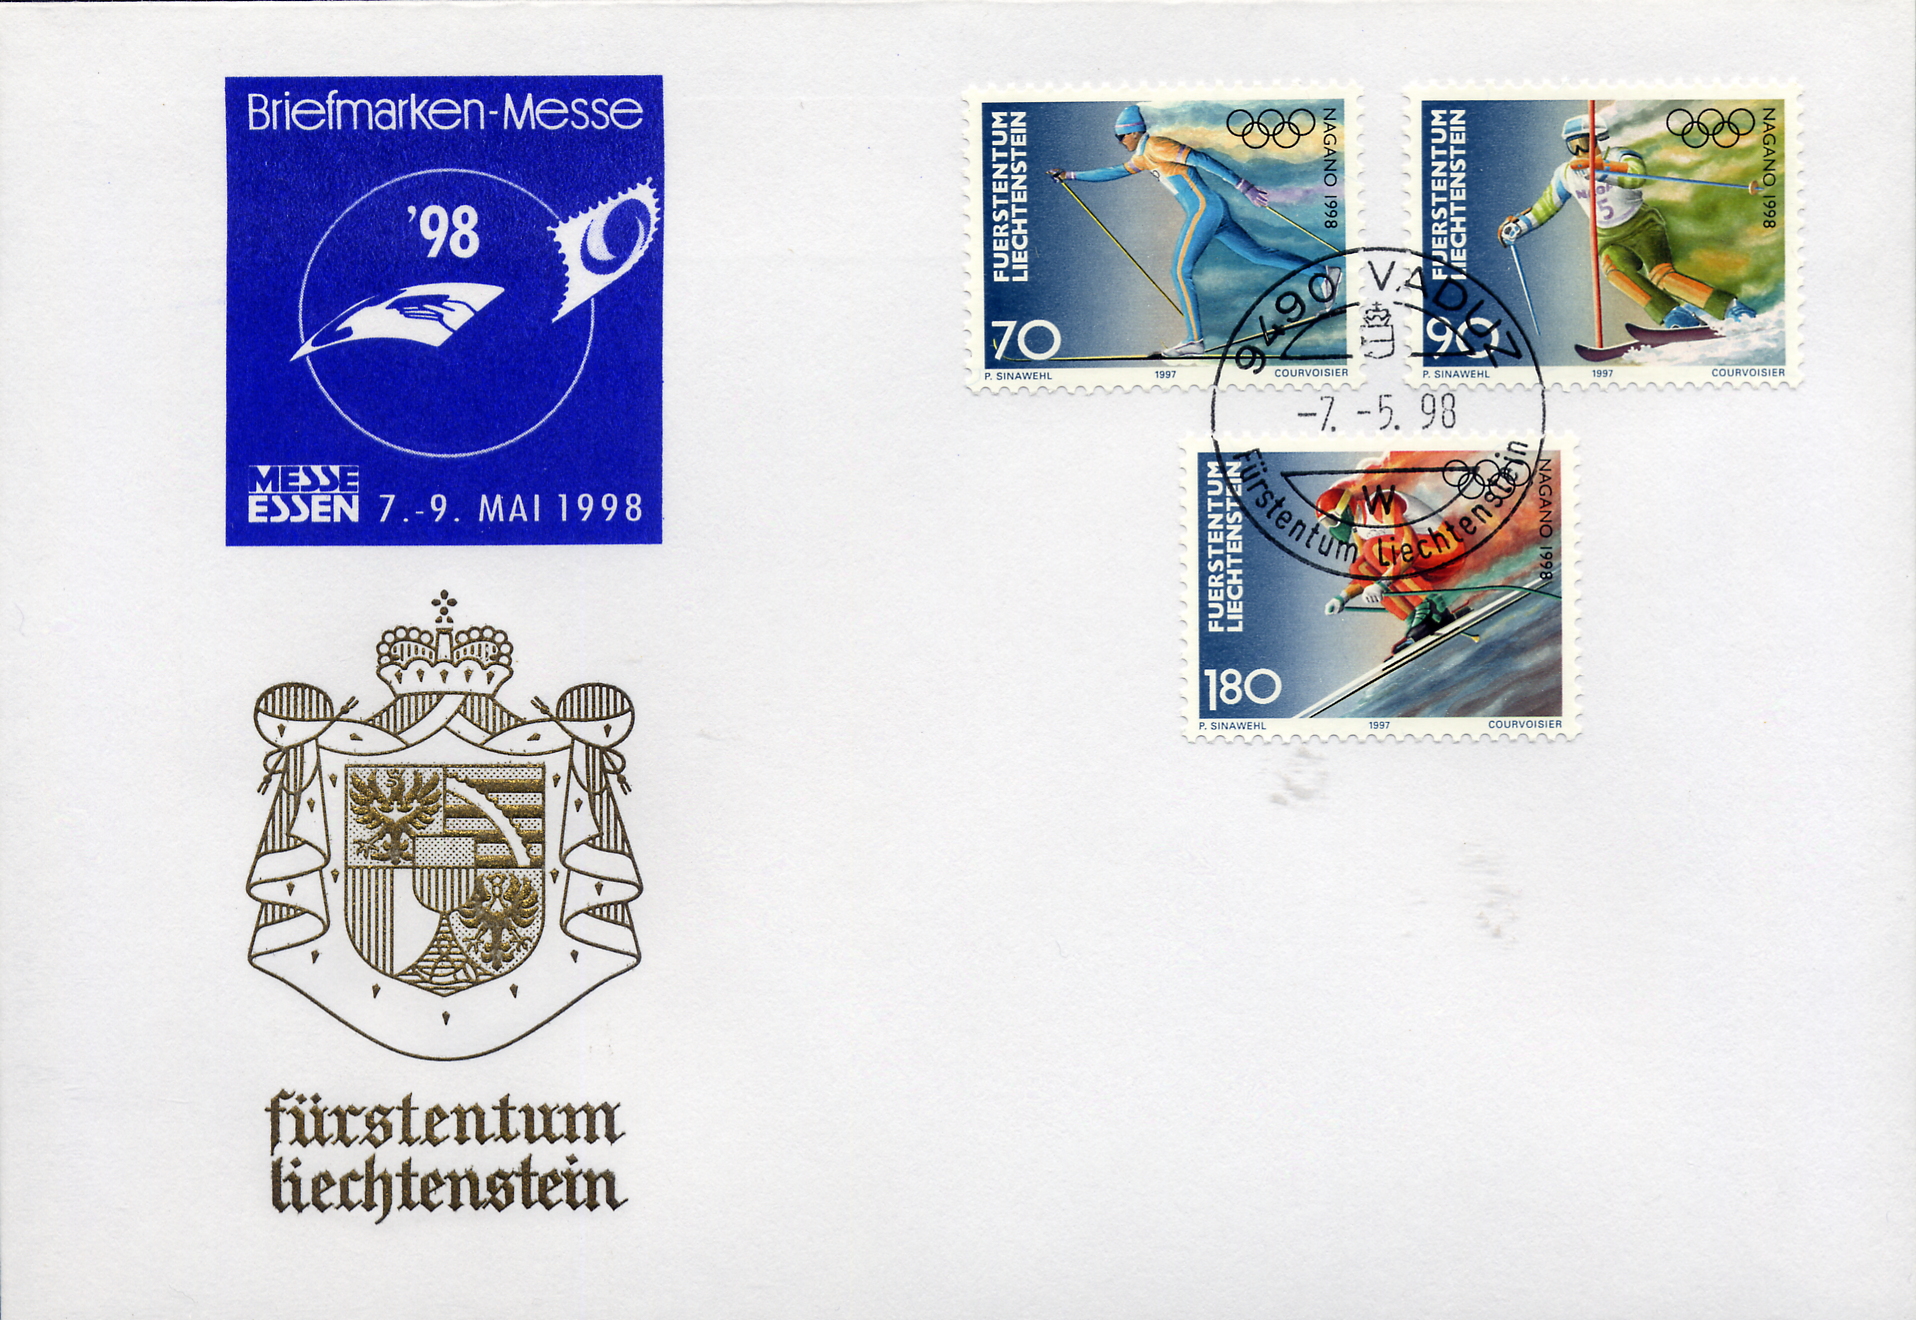 https://swiss-stamps.org/wp-content/uploads/2023/12/1998-5-Essen.jpg